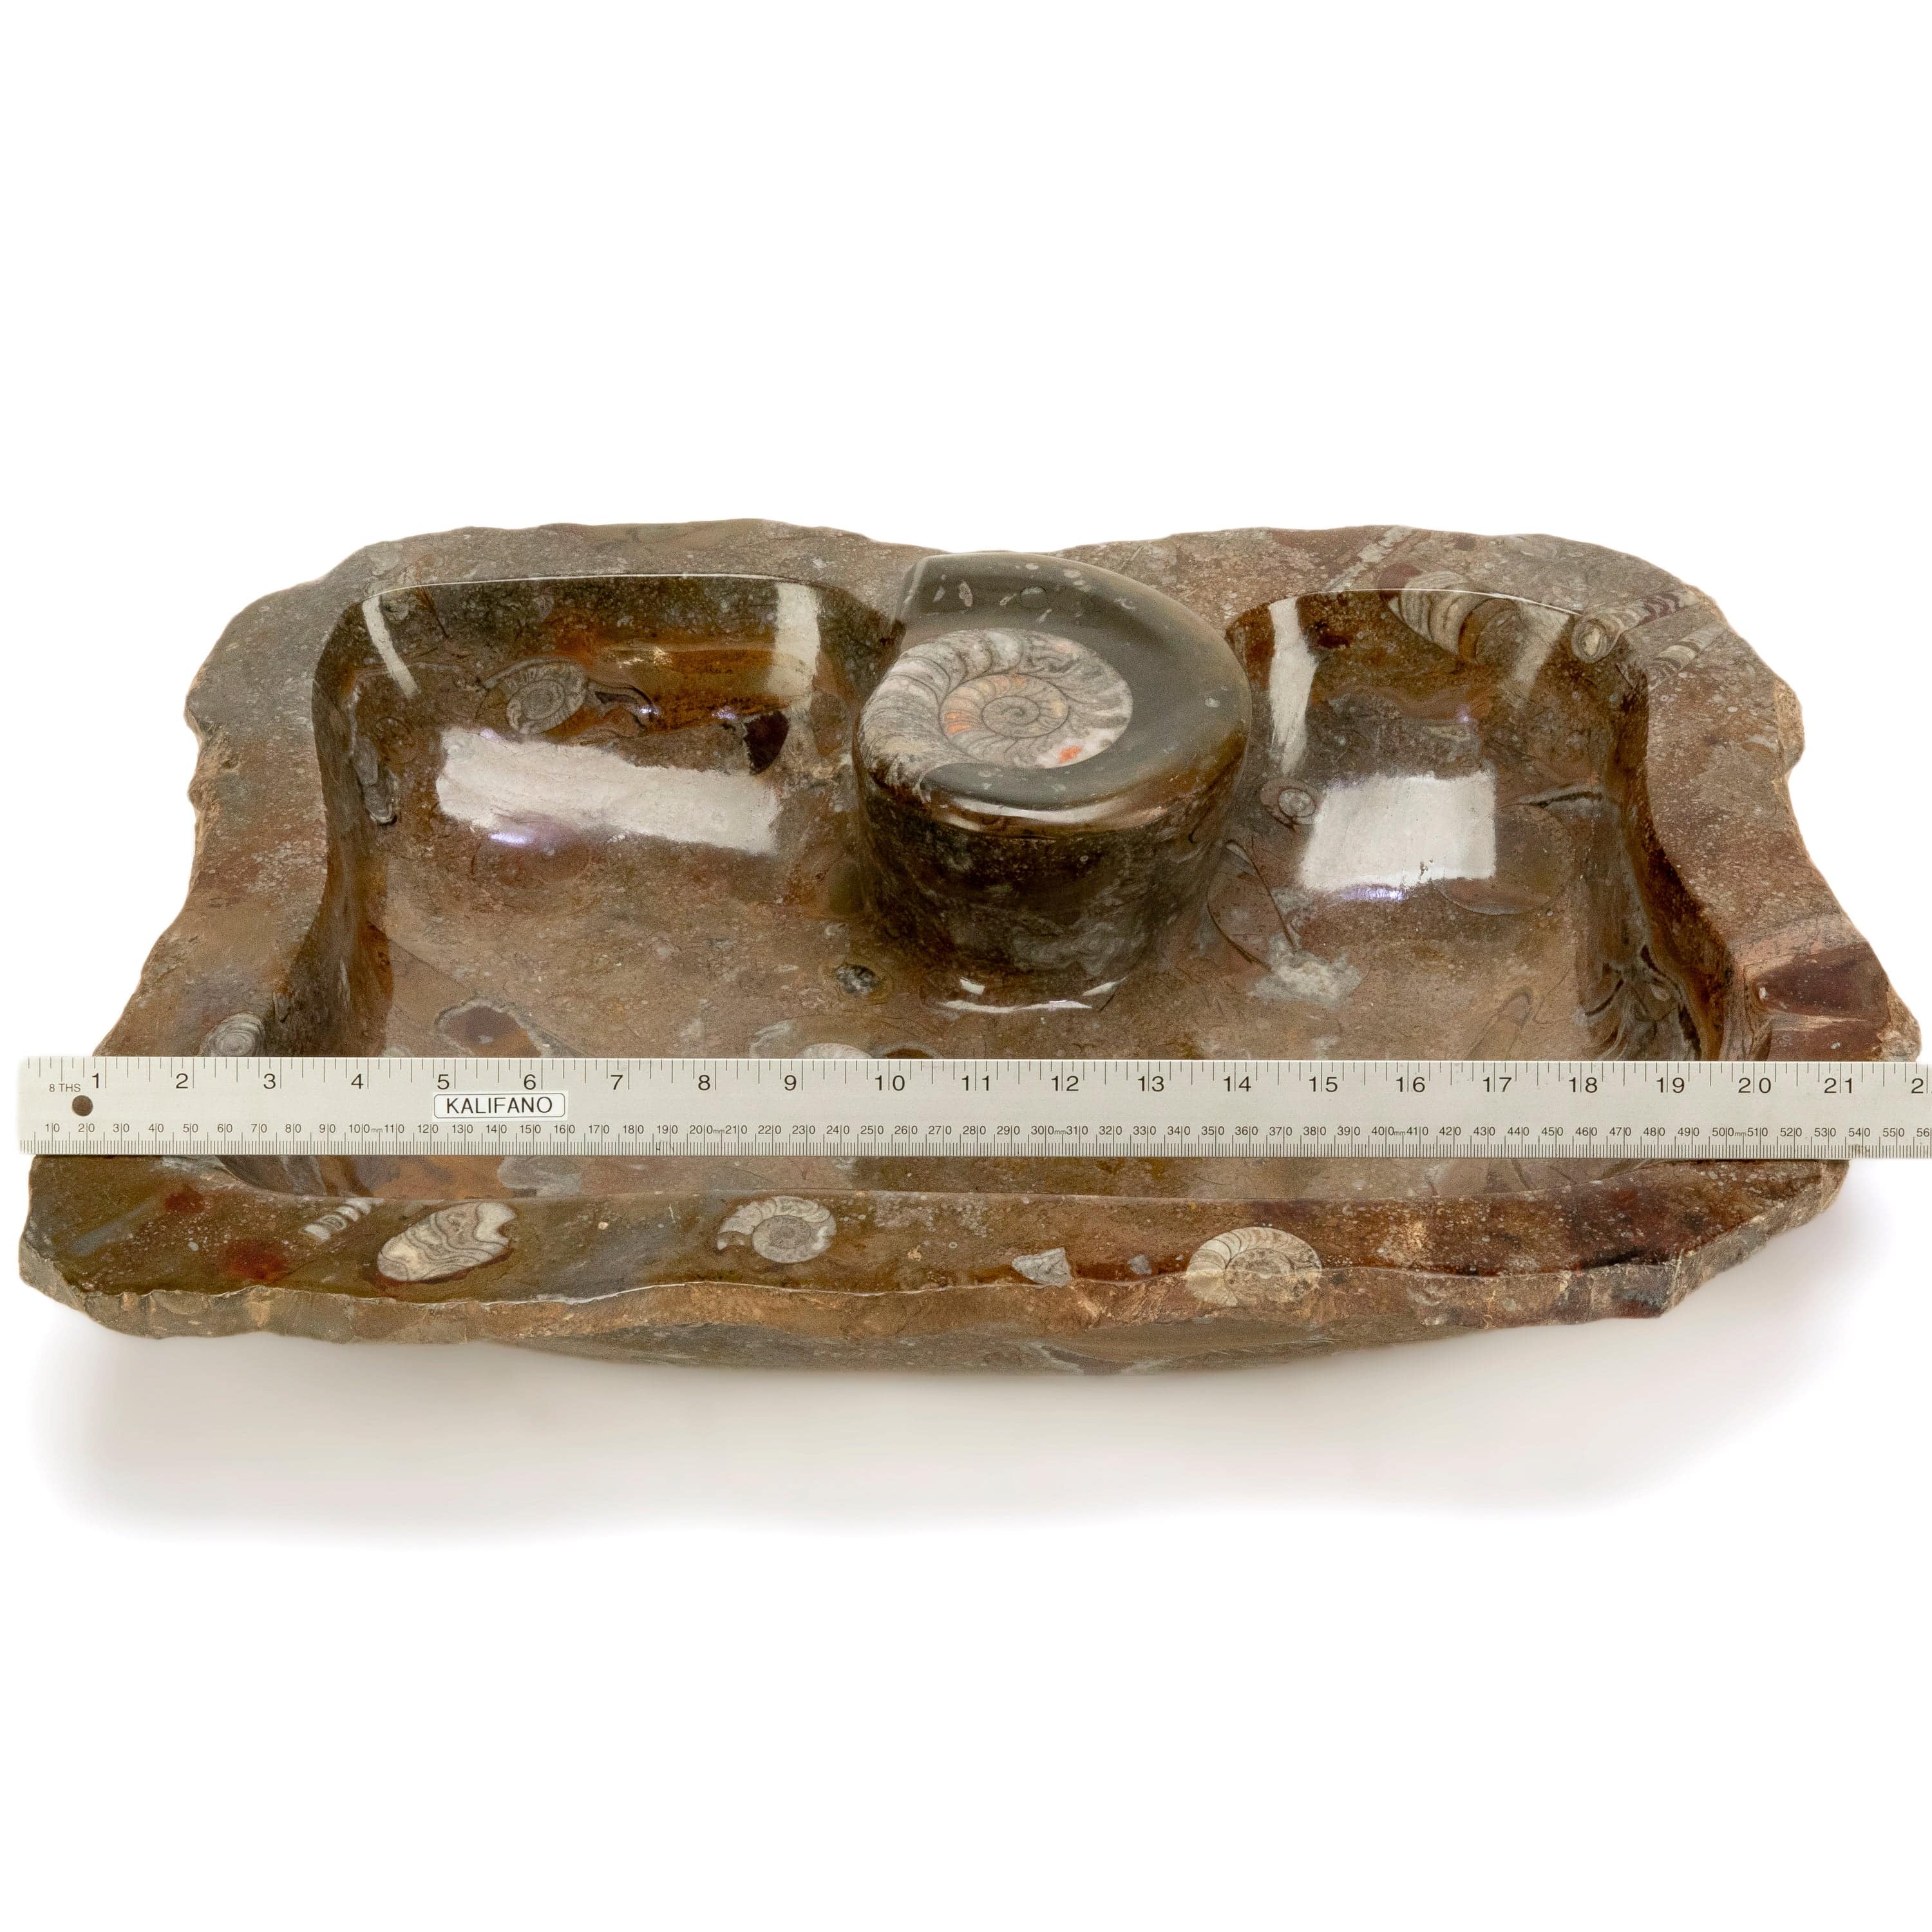 KALIFANO Ammonites & Orthoceras Ammonite Fossil Sink Bowl from Morocco - 23" AMBOWL3200.004